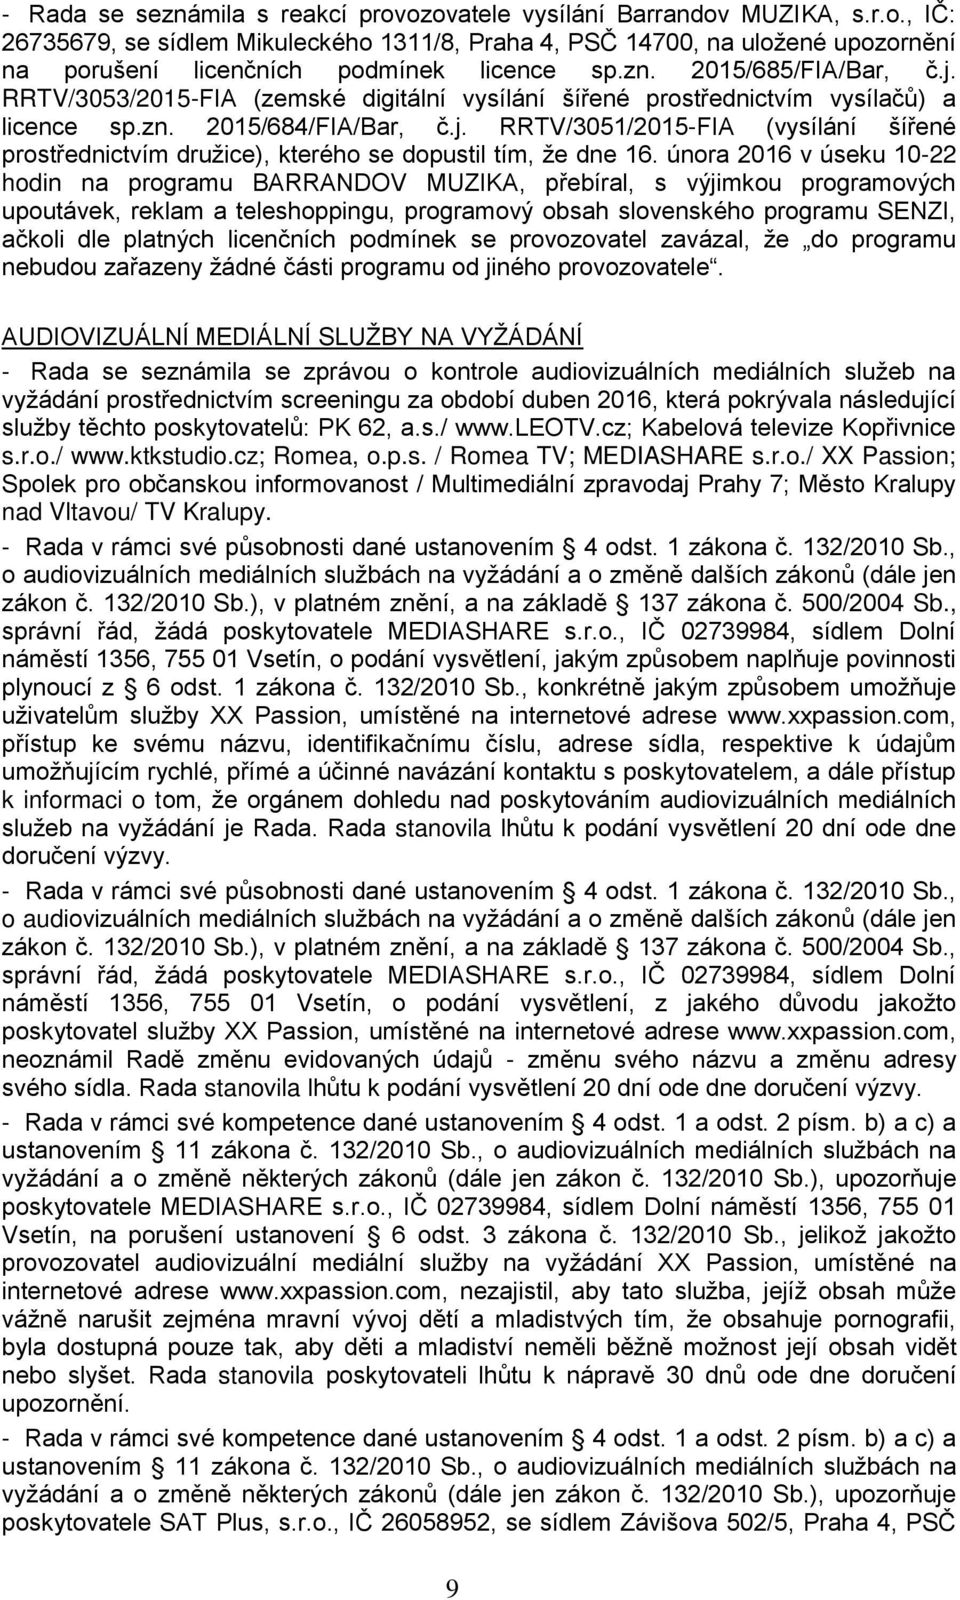 února 2016 v úseku 10-22 hodin na programu BARRANDOV MUZIKA, přebíral, s výjimkou programových upoutávek, reklam a teleshoppingu, programový obsah slovenského programu SENZI, ačkoli dle platných